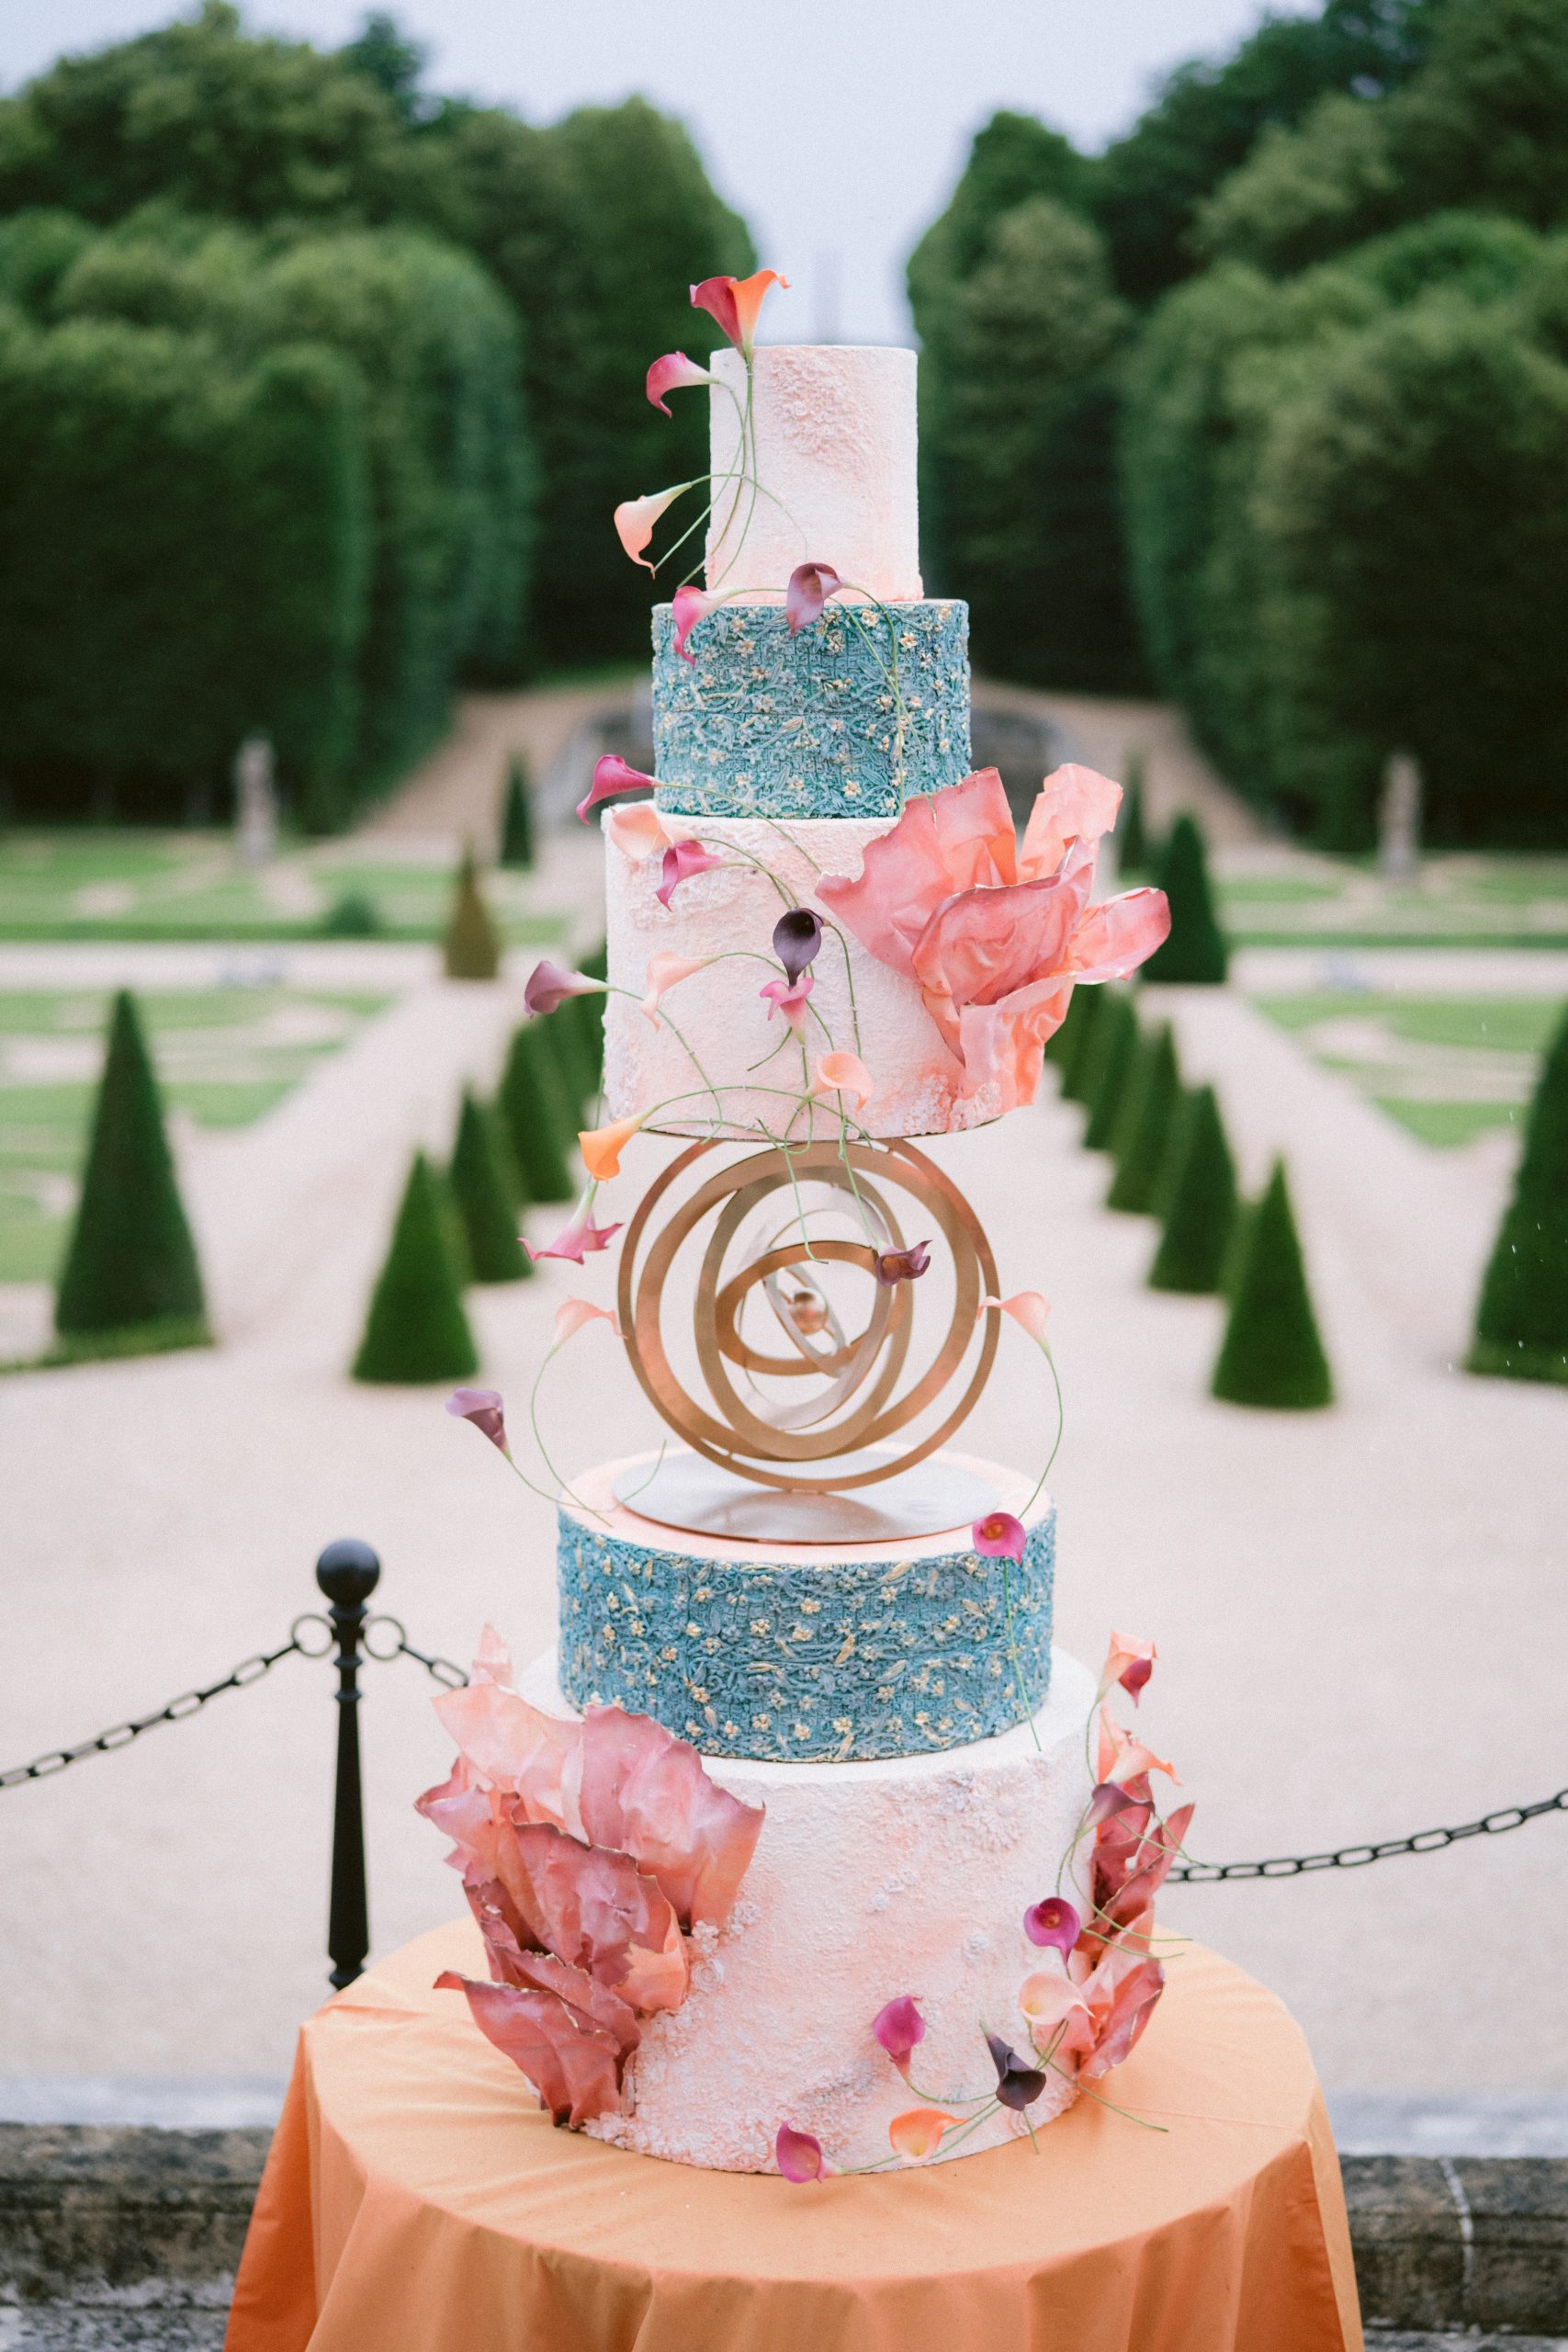 Wedding cake event Paris - Luxury weddding cake - Paris - Wedding planner Paris